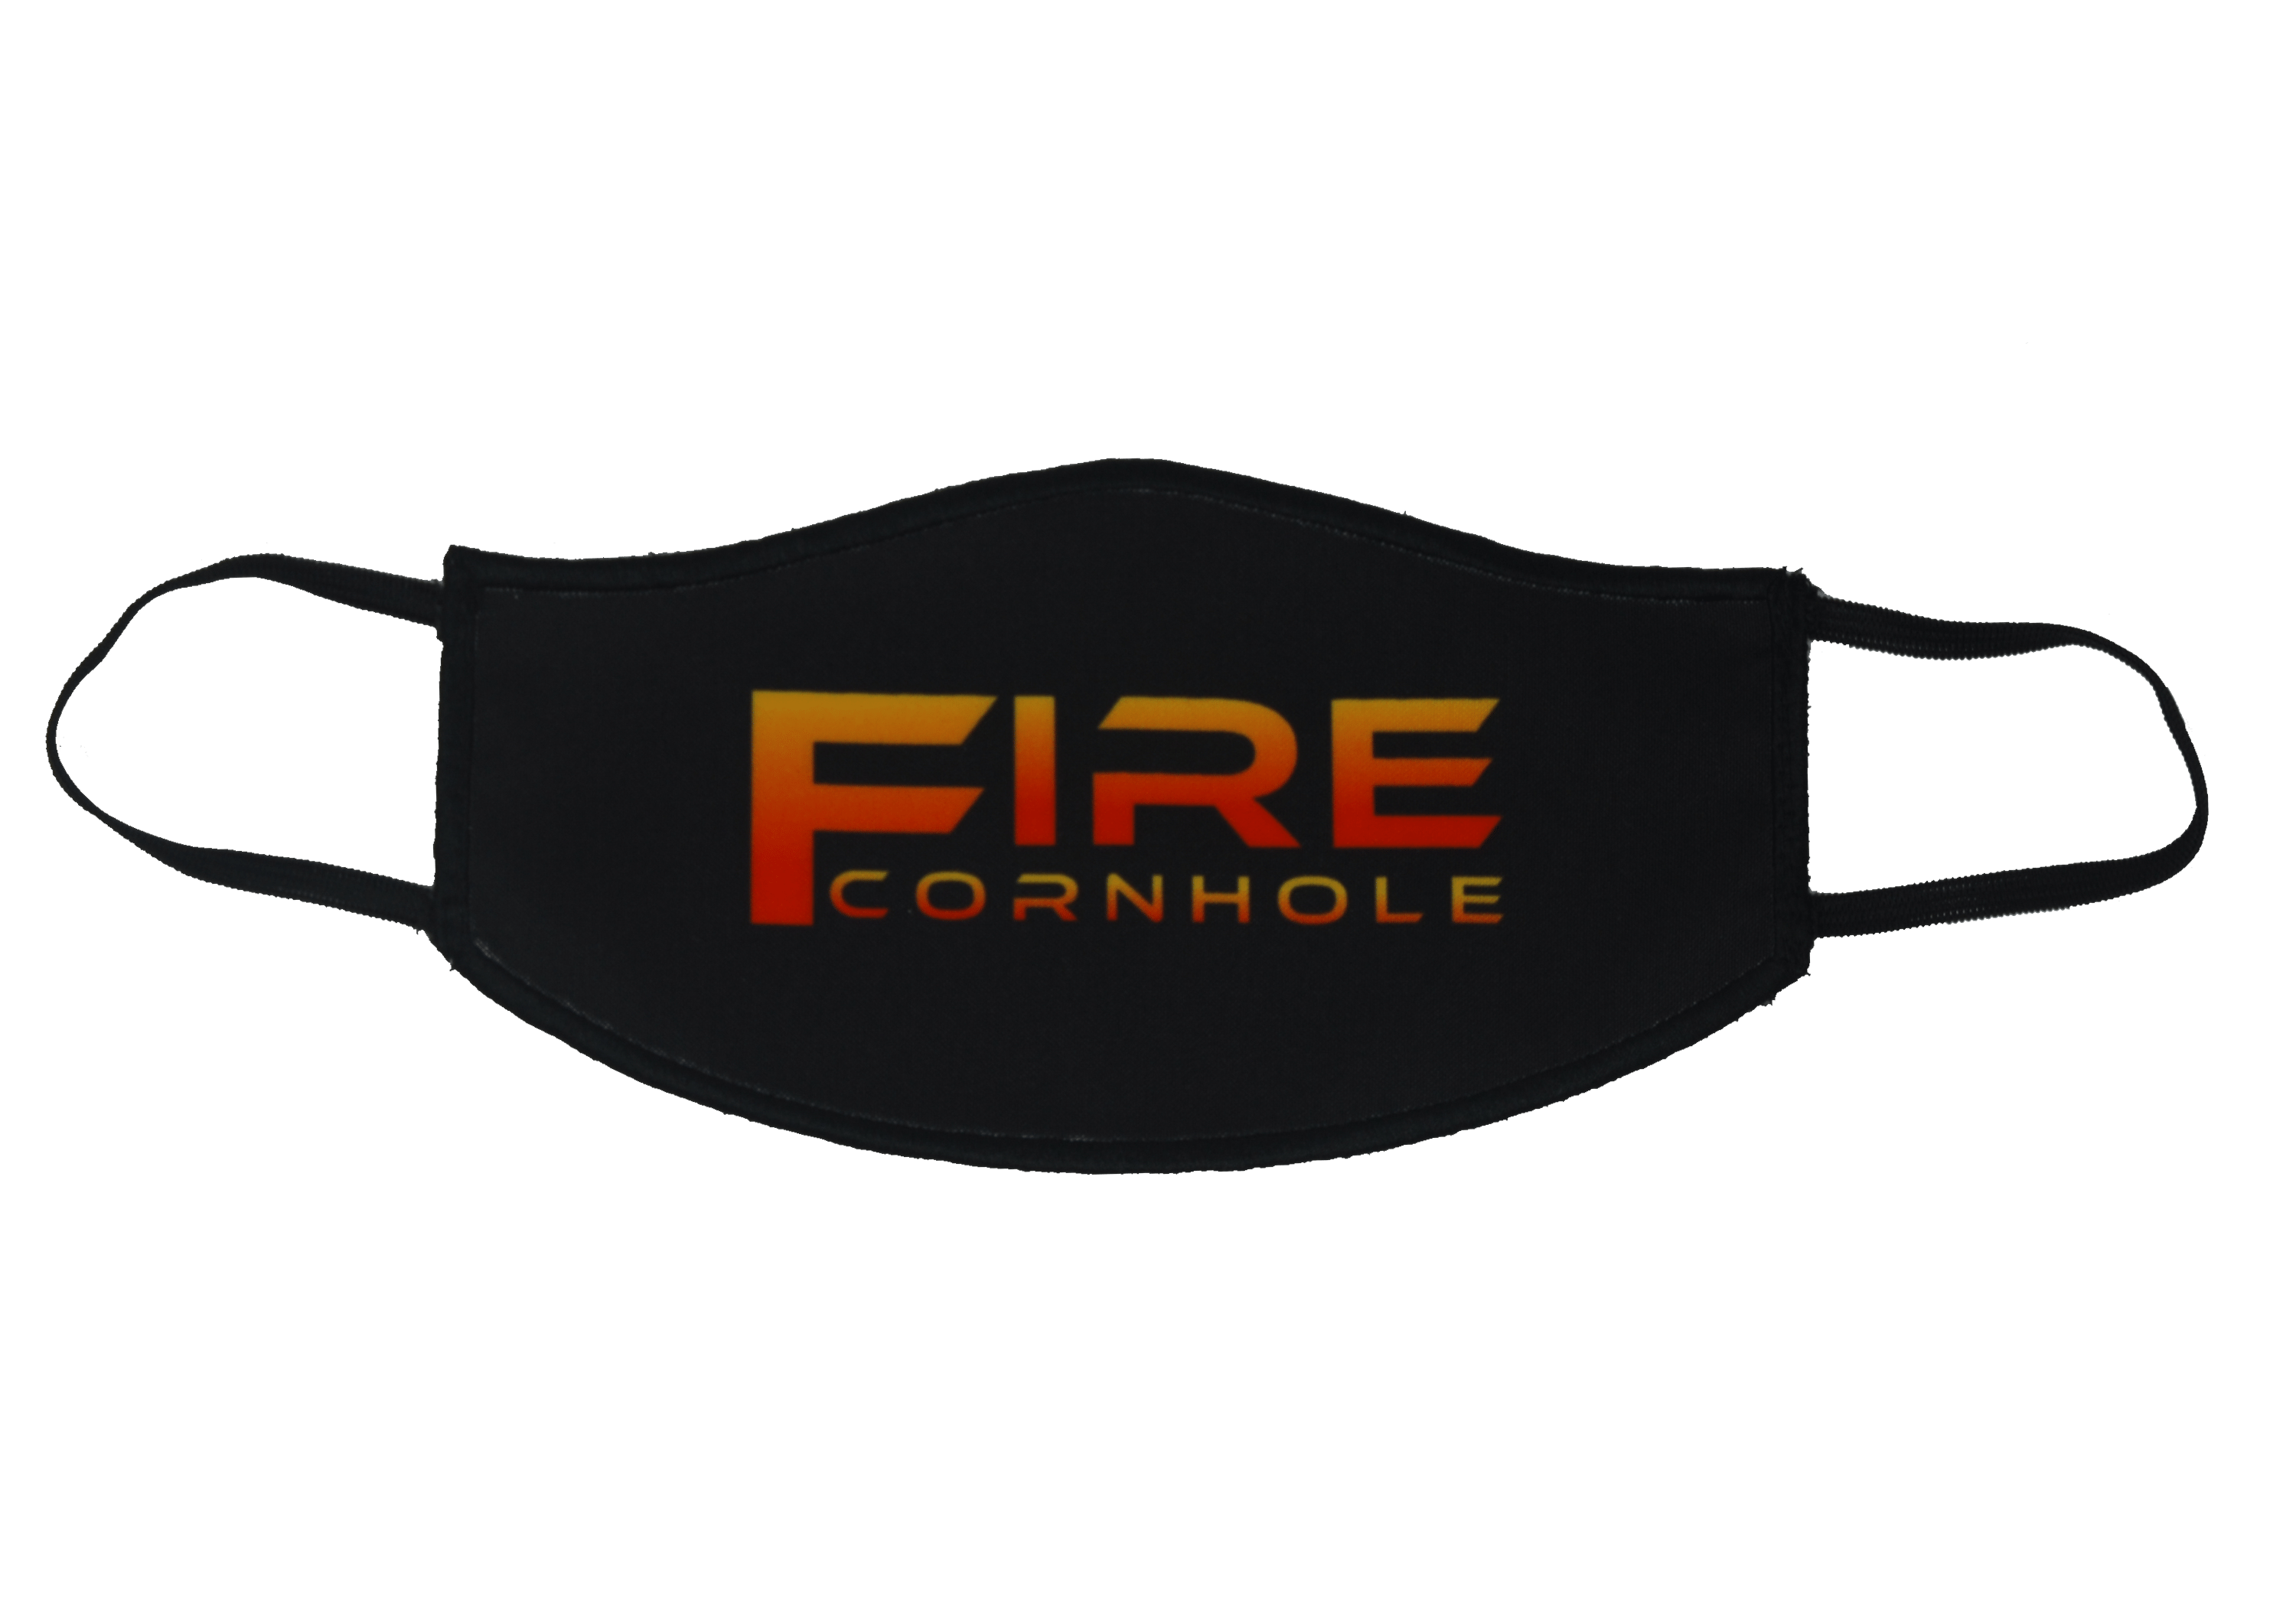 Fire Cornhole Facemask